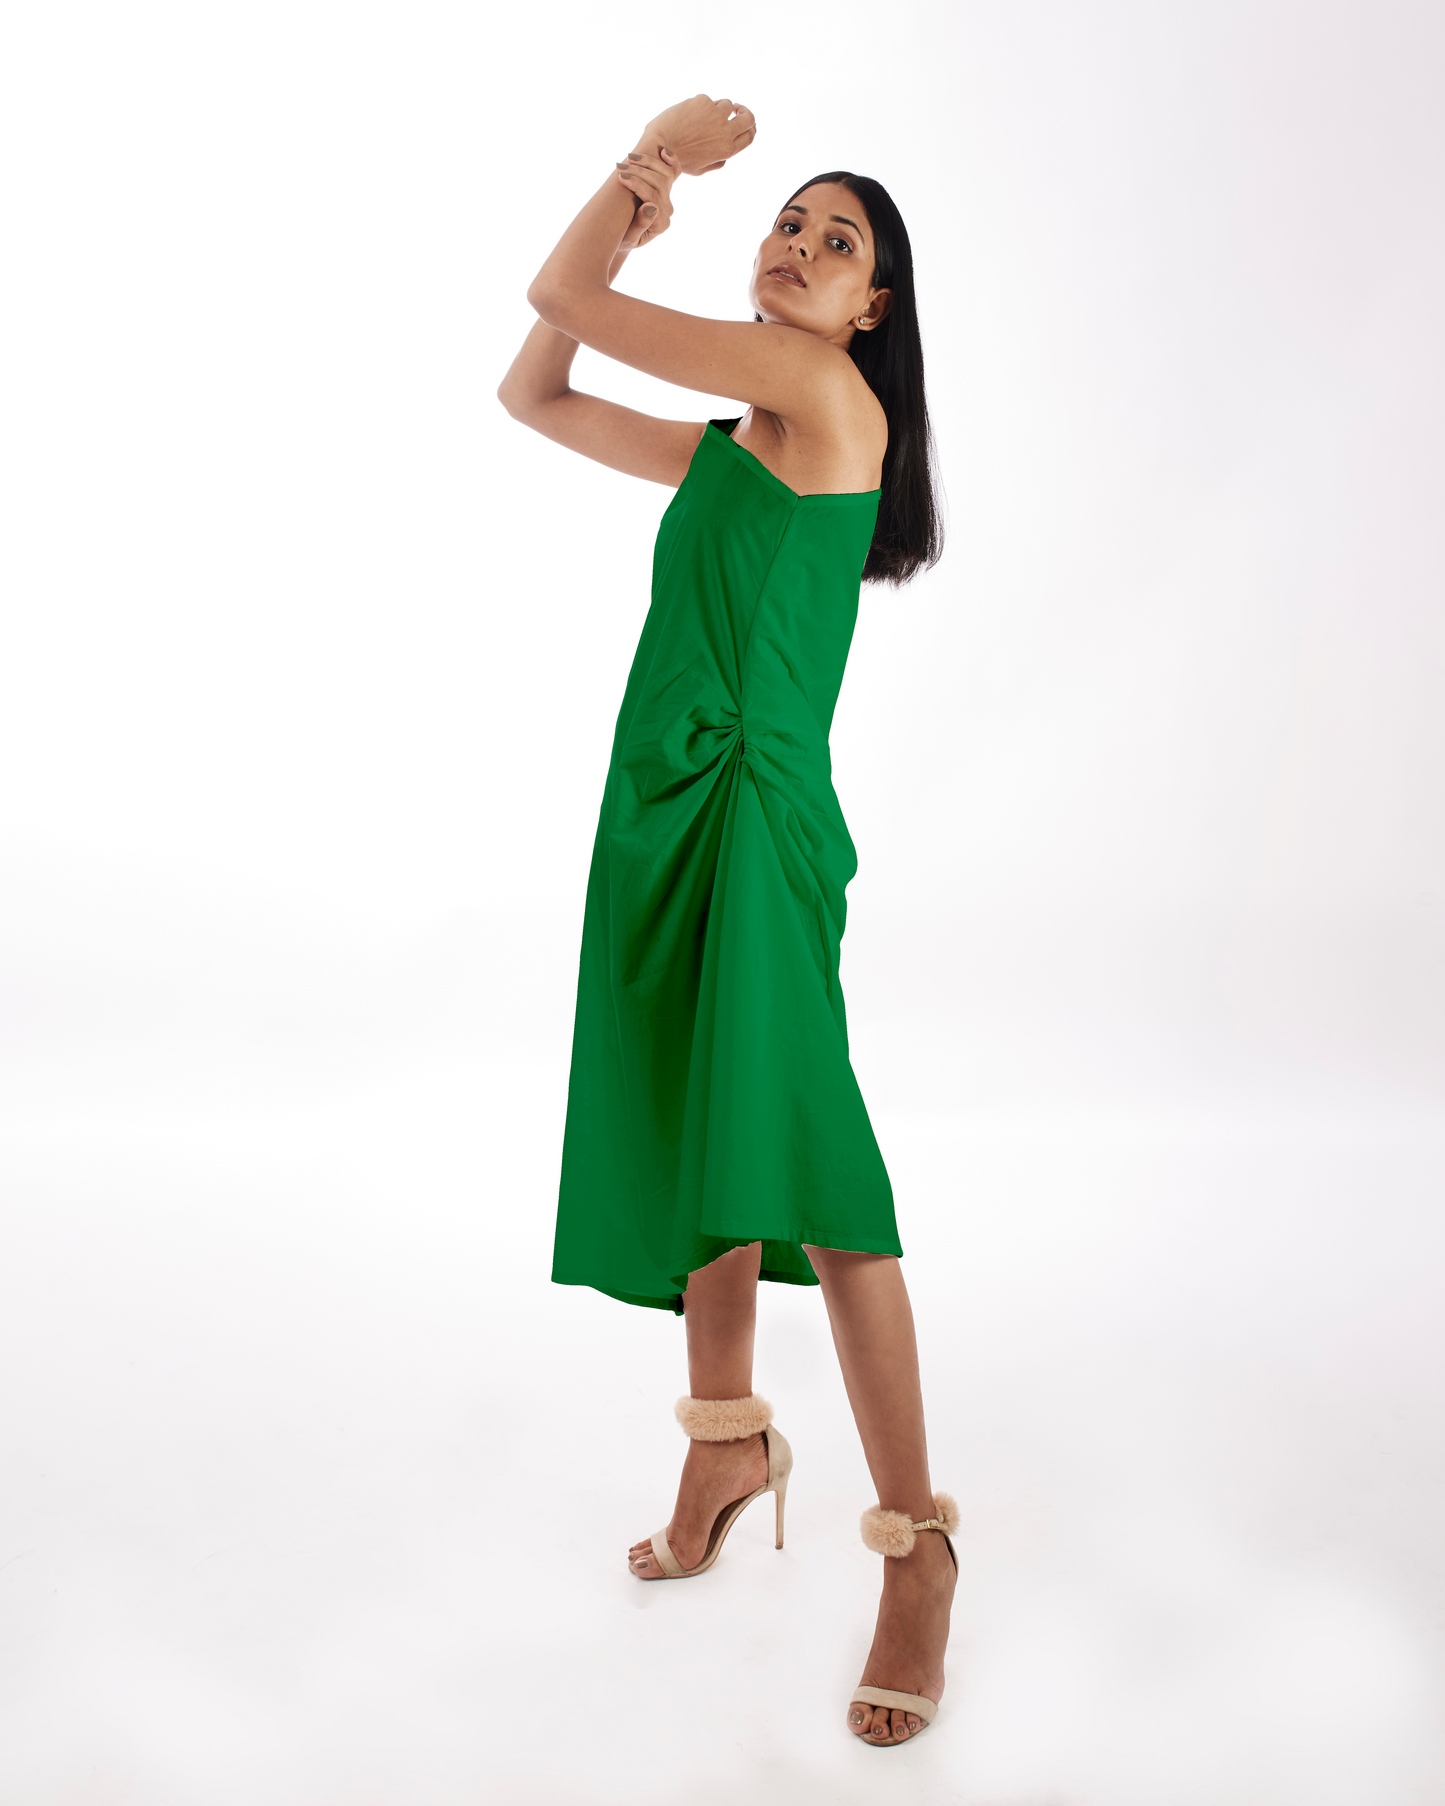 Green One Shoulder Dress at Kamakhyaa by Kamakhyaa. This item is 100% pure cotton, Evening Wear, FB ADS JUNE, Green, KKYSS, Natural, One Shoulder Dresses, Regular Fit, Solids, Summer Sutra, Womenswear